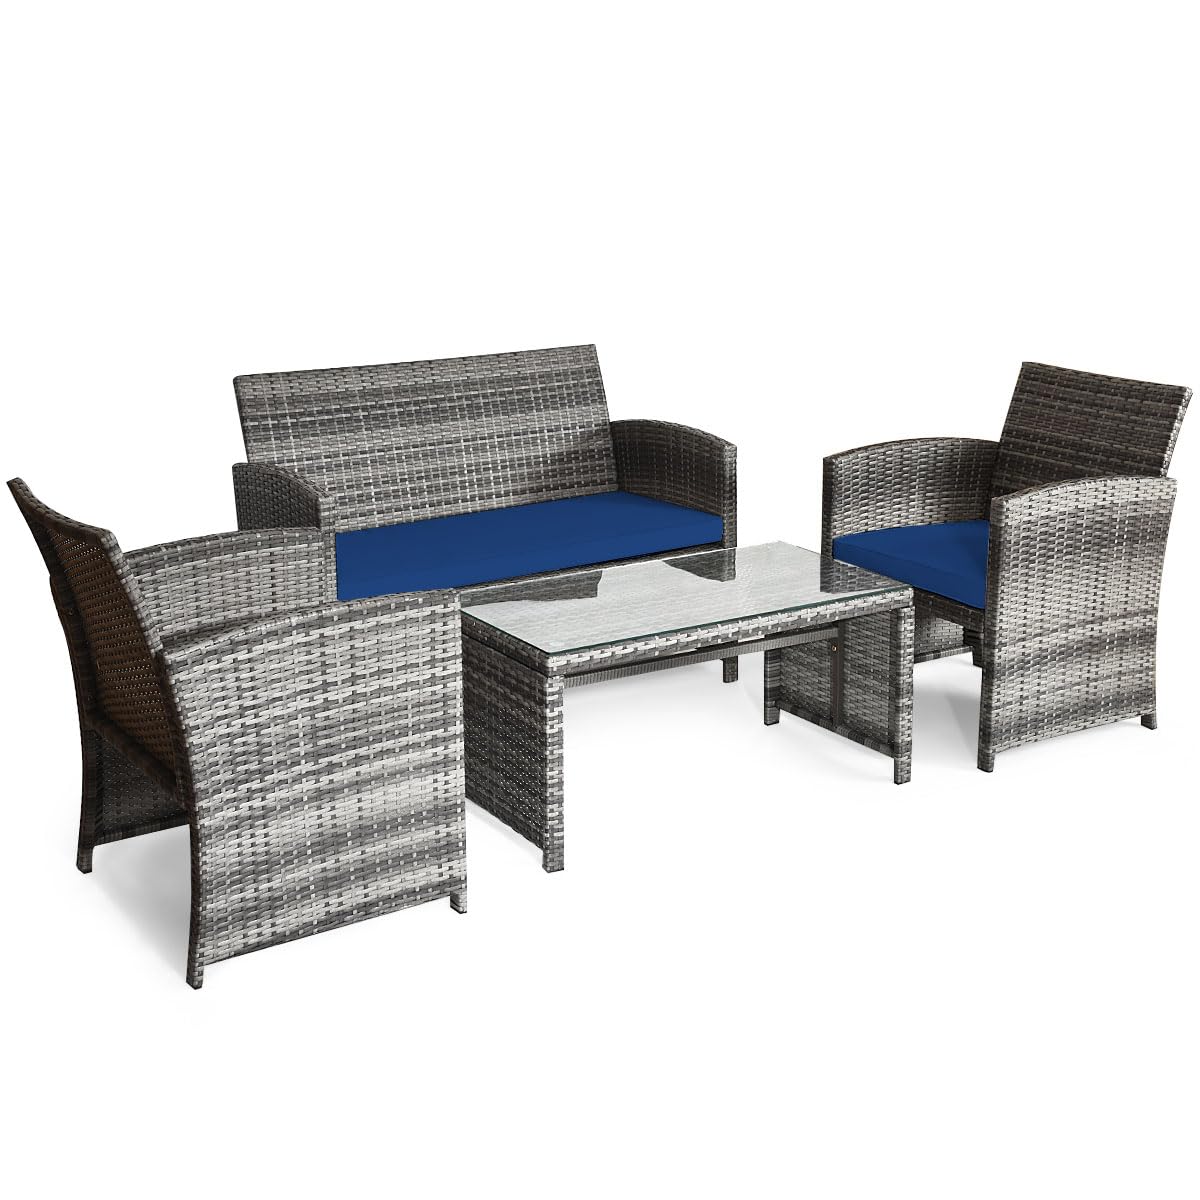 Giantex 4 Pc Rattan Patio Furniture Garden Lawn Sofa Cushioned Seat Mix Gray Wicker Conversation Sets